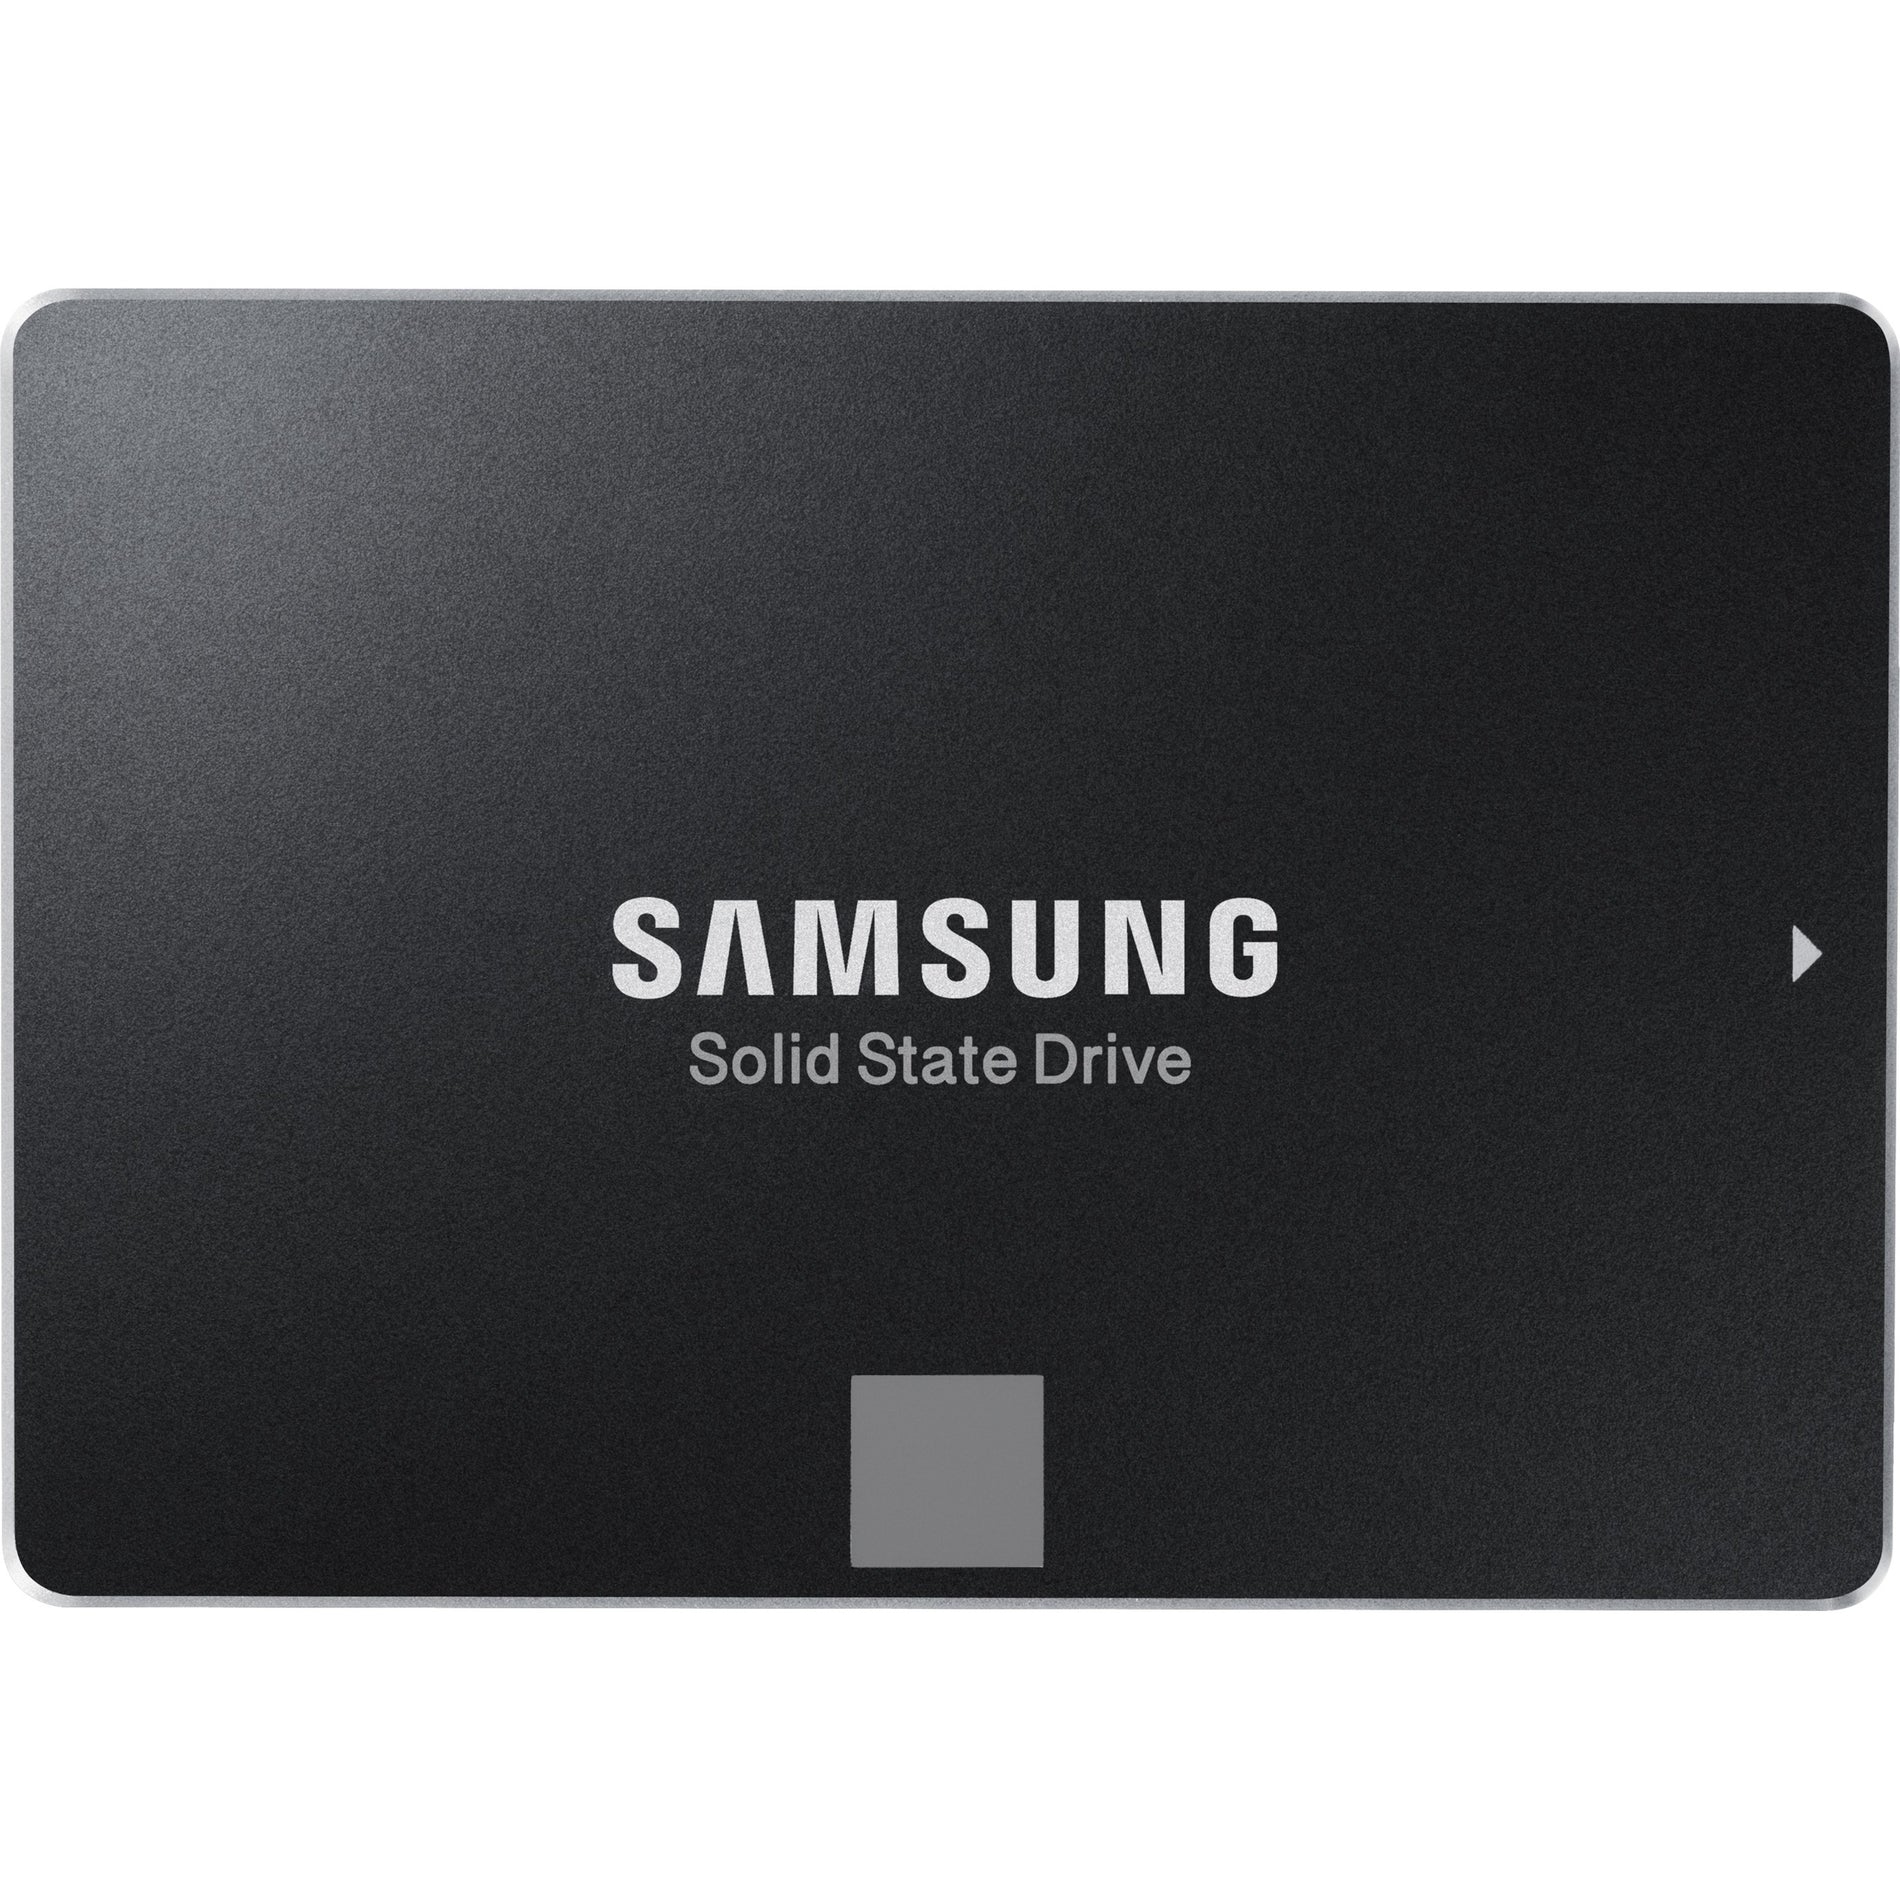 Samsung MZ-75E250B/AM SSD 850 EVO 250GB, SATA III, 2.5" Internal Solid State Drive